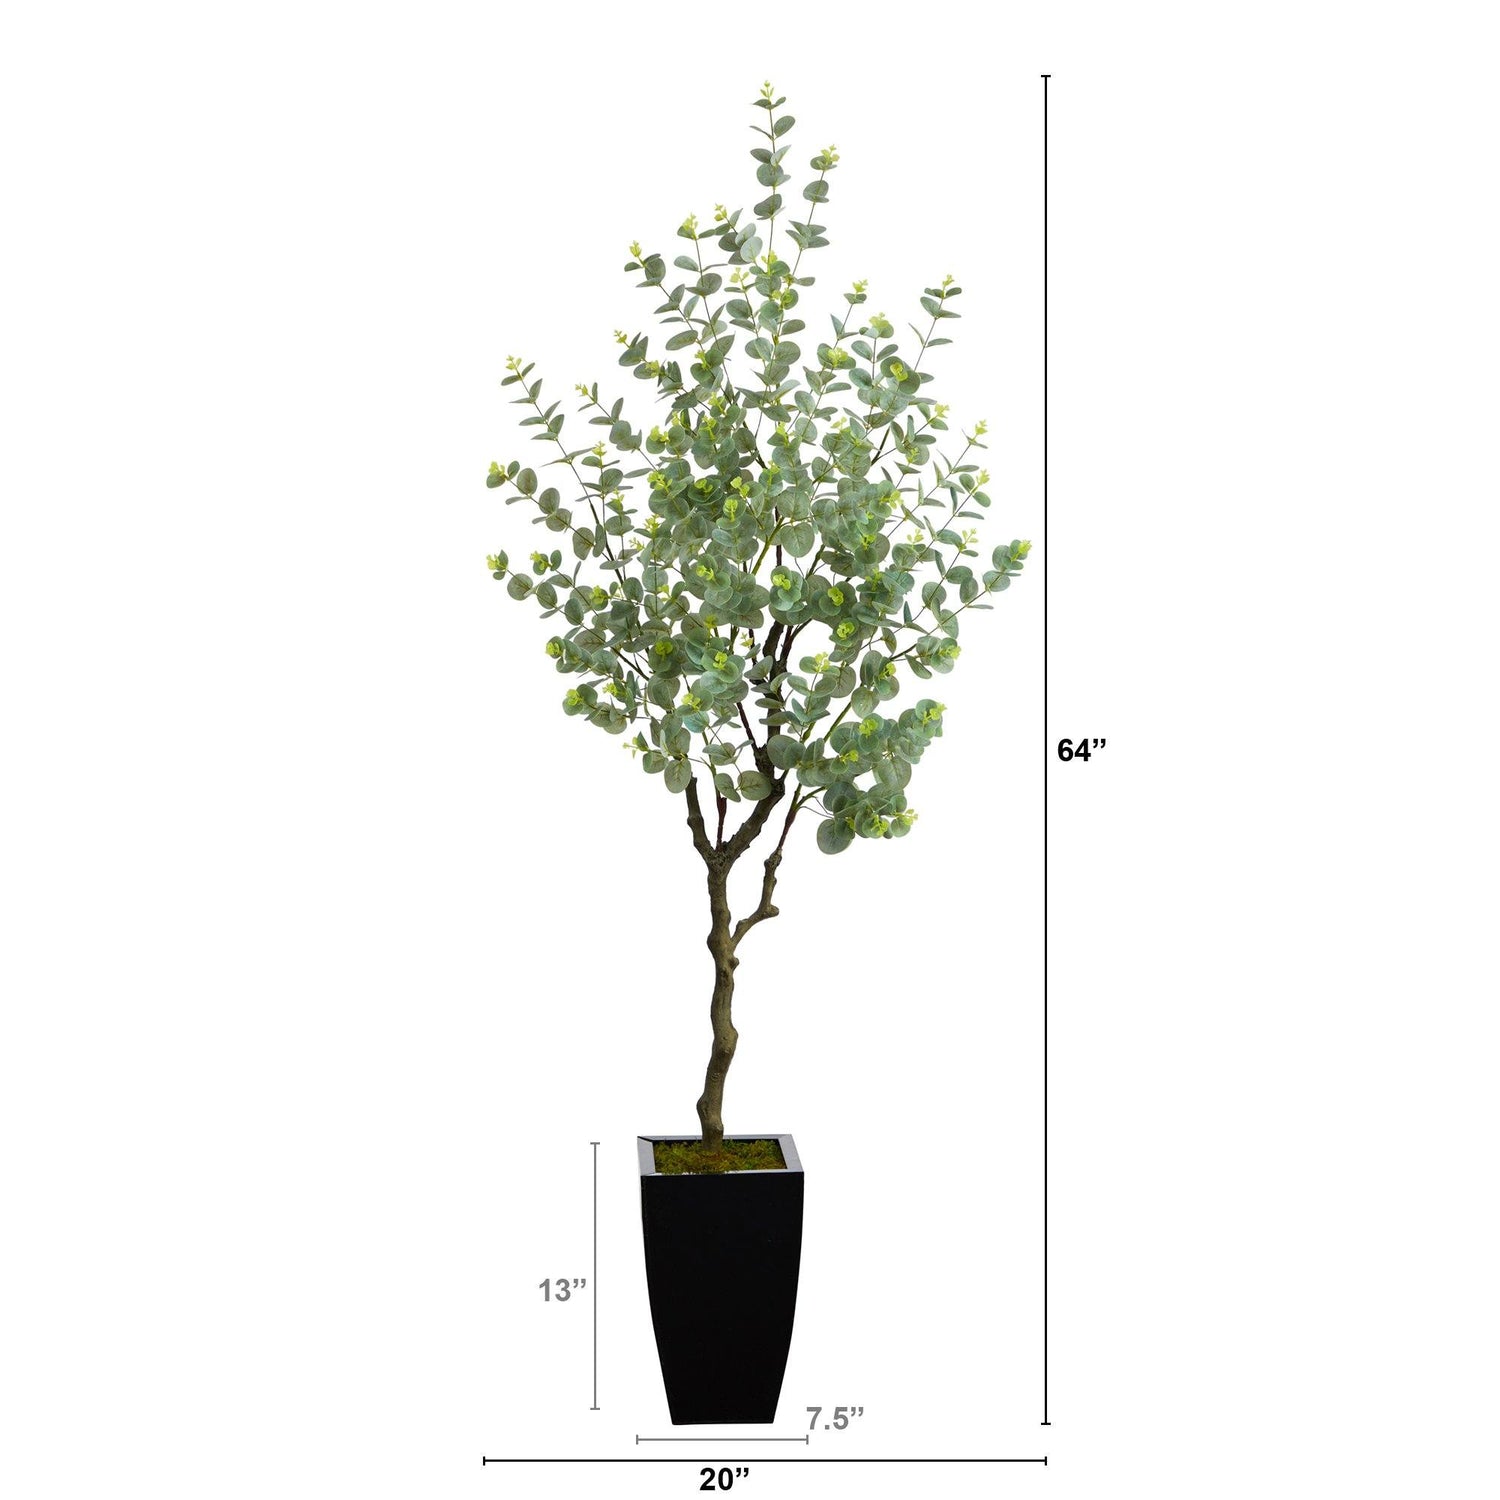 64” Eucalyptus Artificial Tree in Black Metal Planter